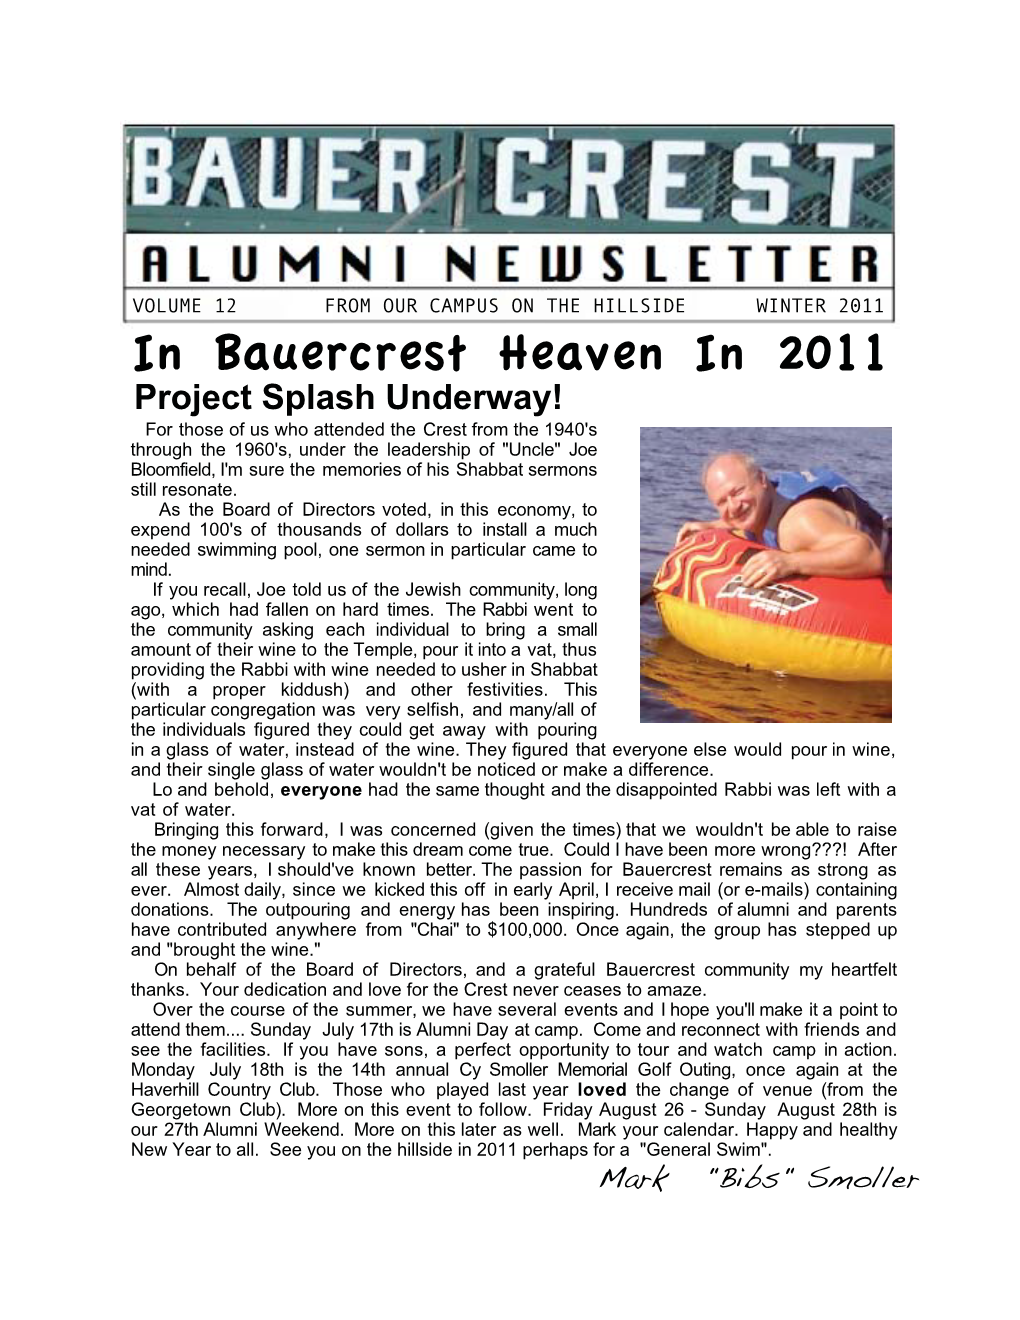 In Bauercrest Heaven in 2011